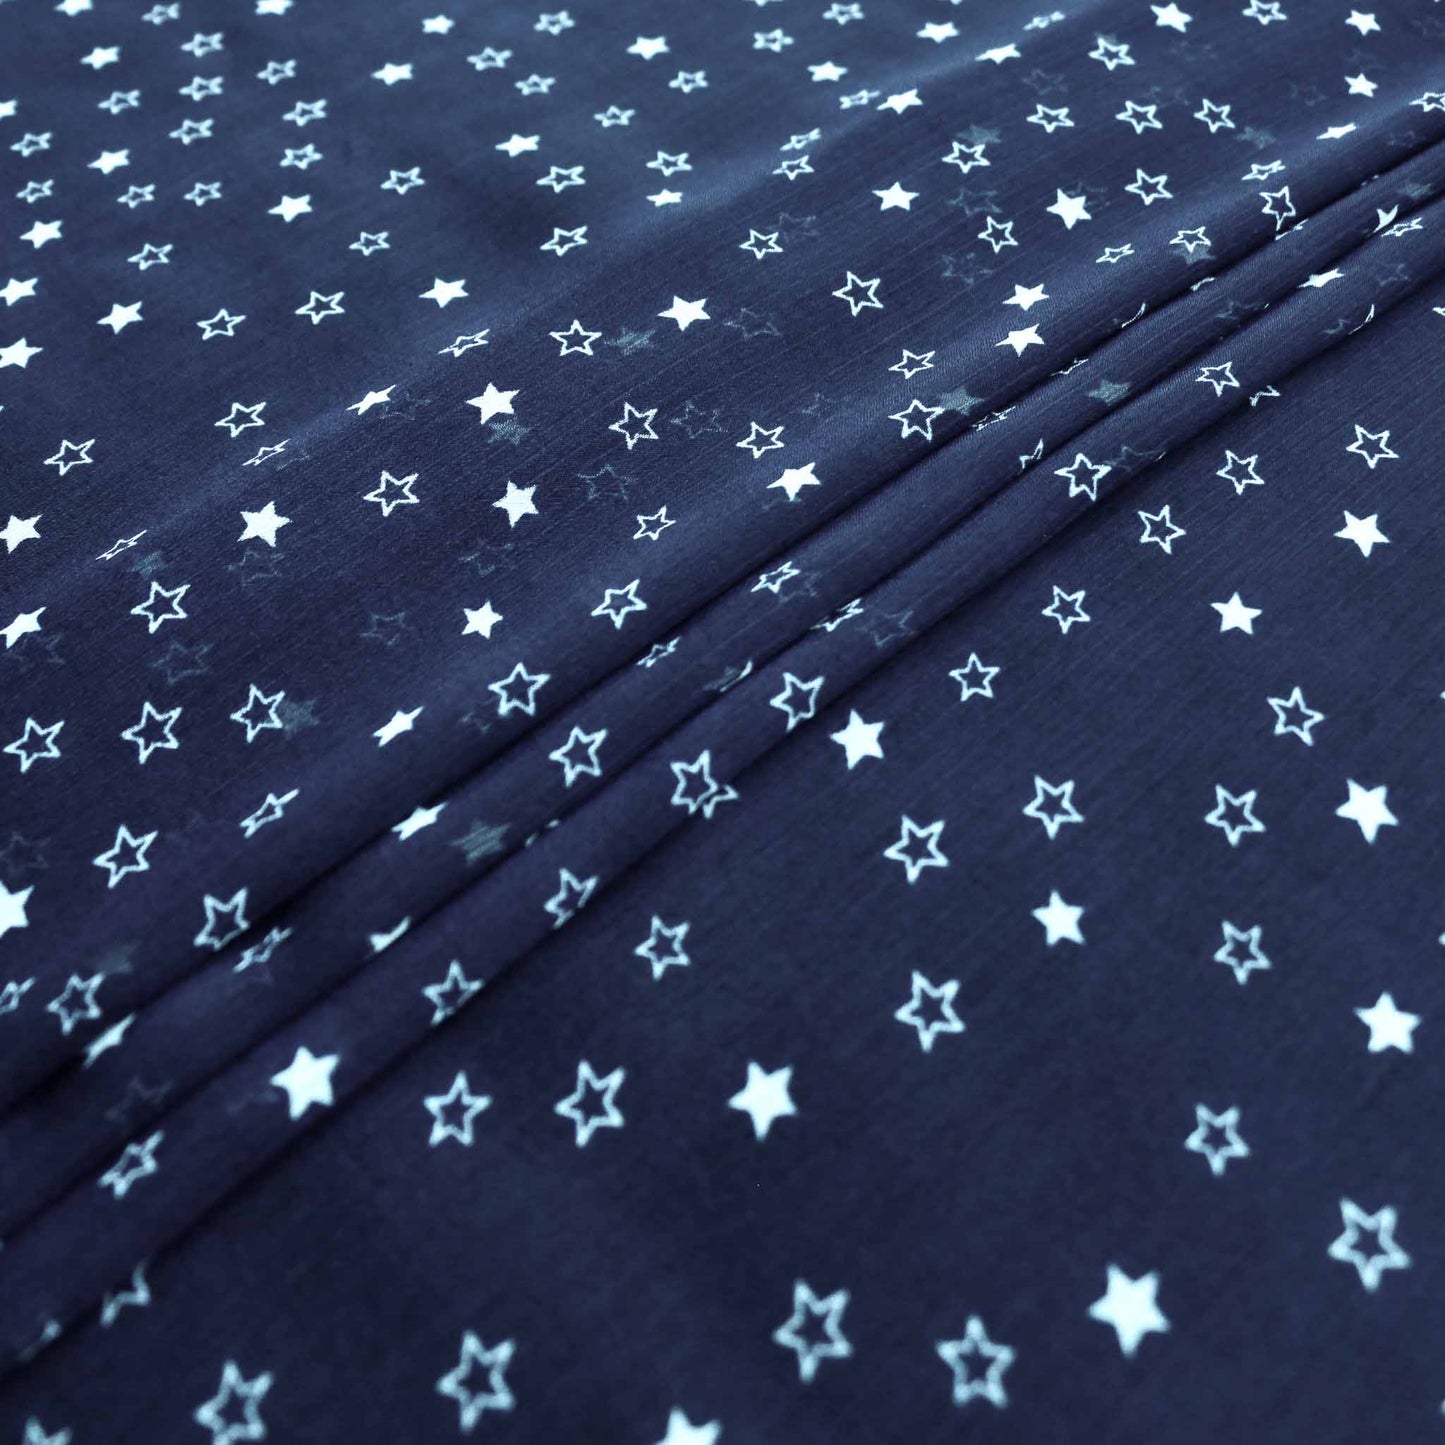 blue chiffon crinkle dressmaking fabric with white stars design print